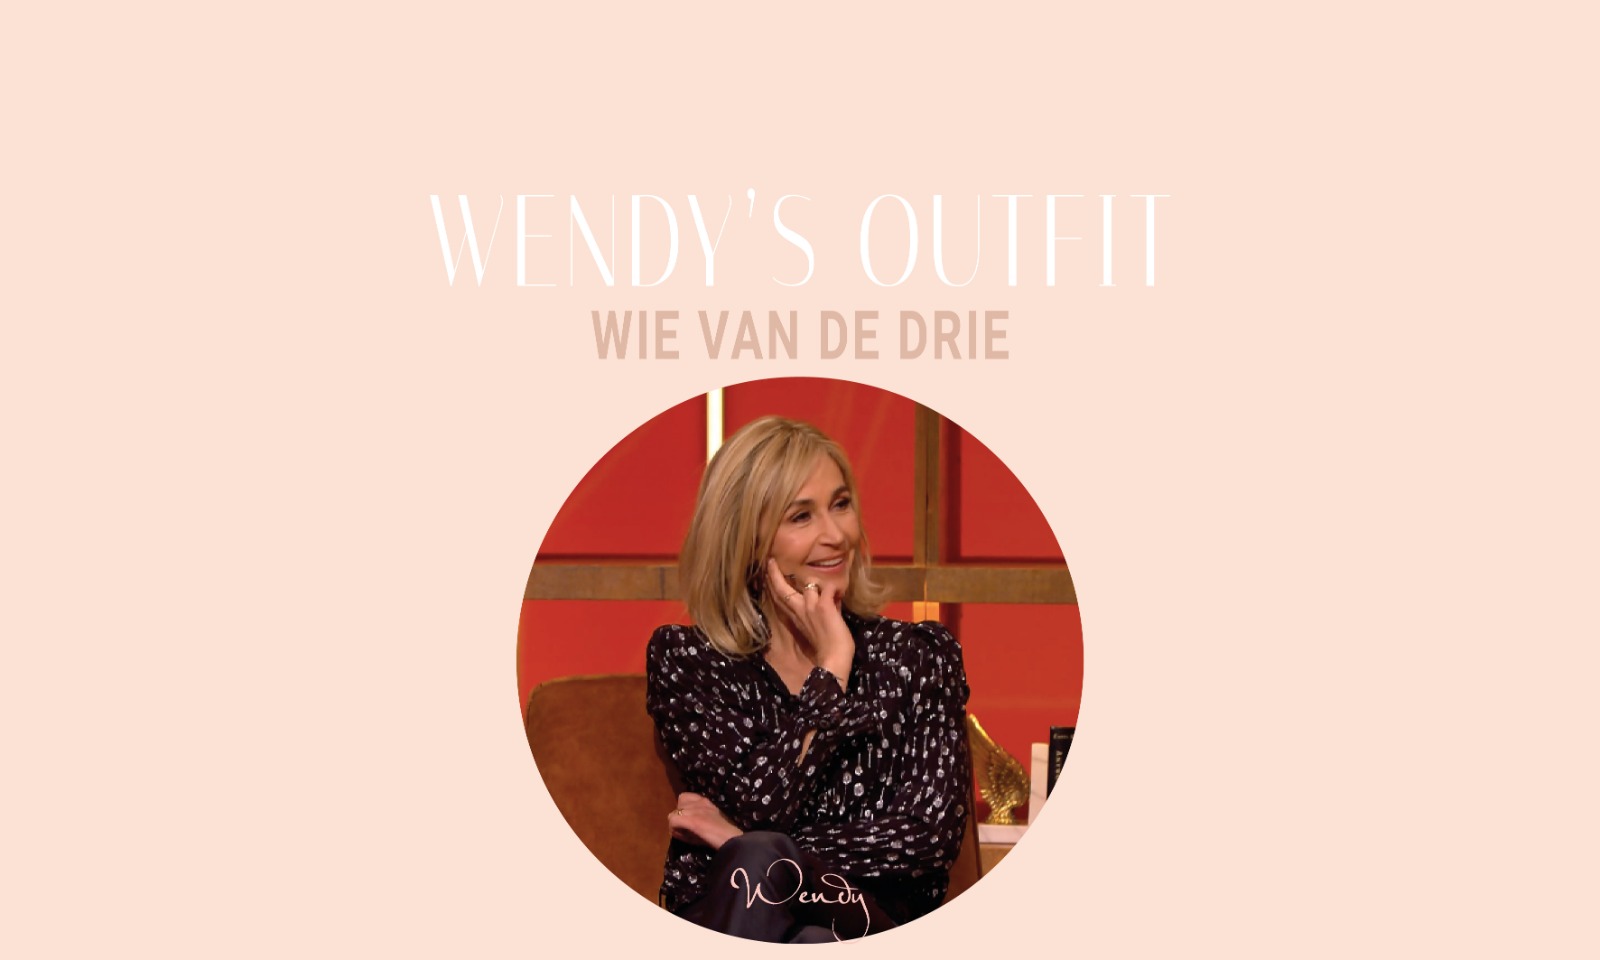 WhatsApp Image 2021 03 23 at 11.42.56 Wendy's outfit - Wie van de drie (seizoen 2 afl. 3)